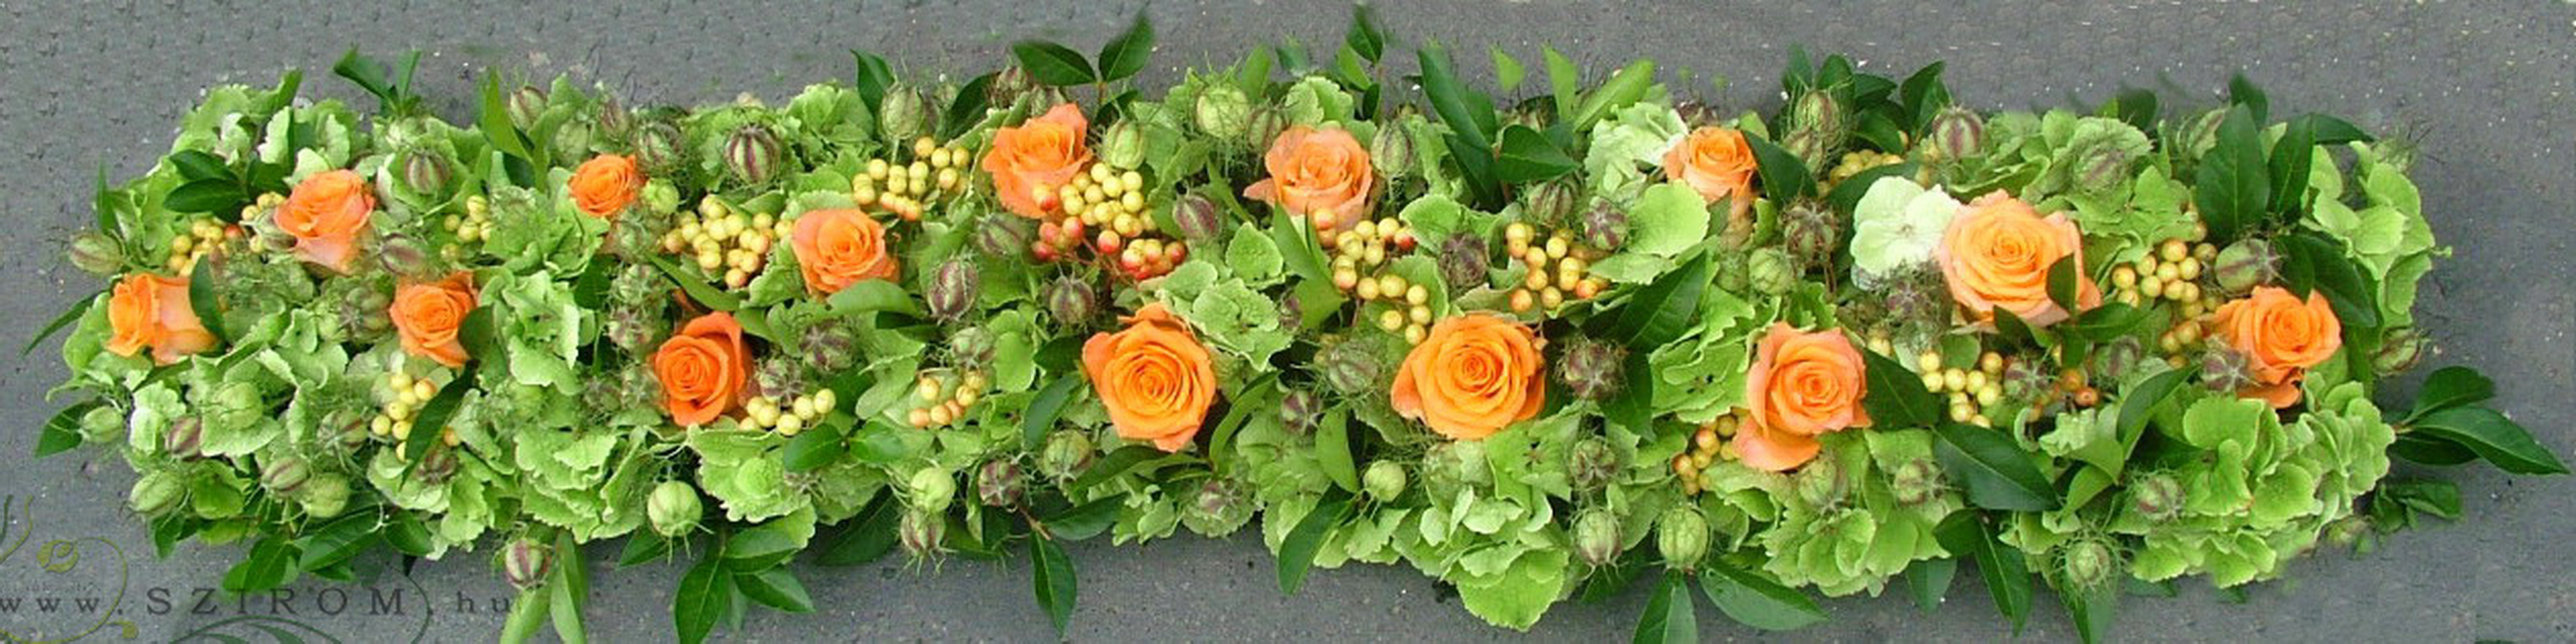 flower delivery Budapest - Main table centerpiece (roses, hydrangeas, green, orange), wedding